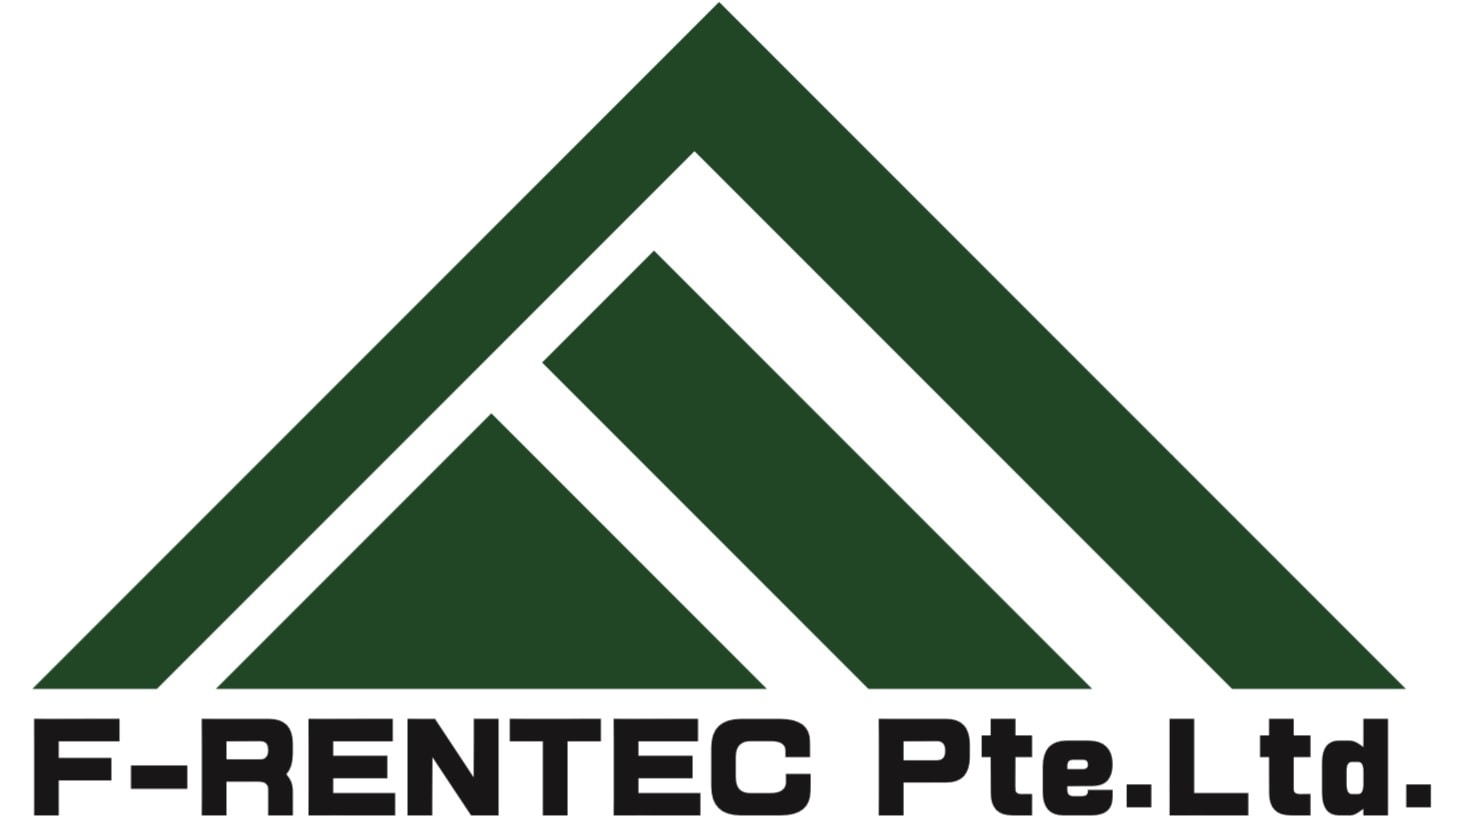 F-RENTEC logo (1)